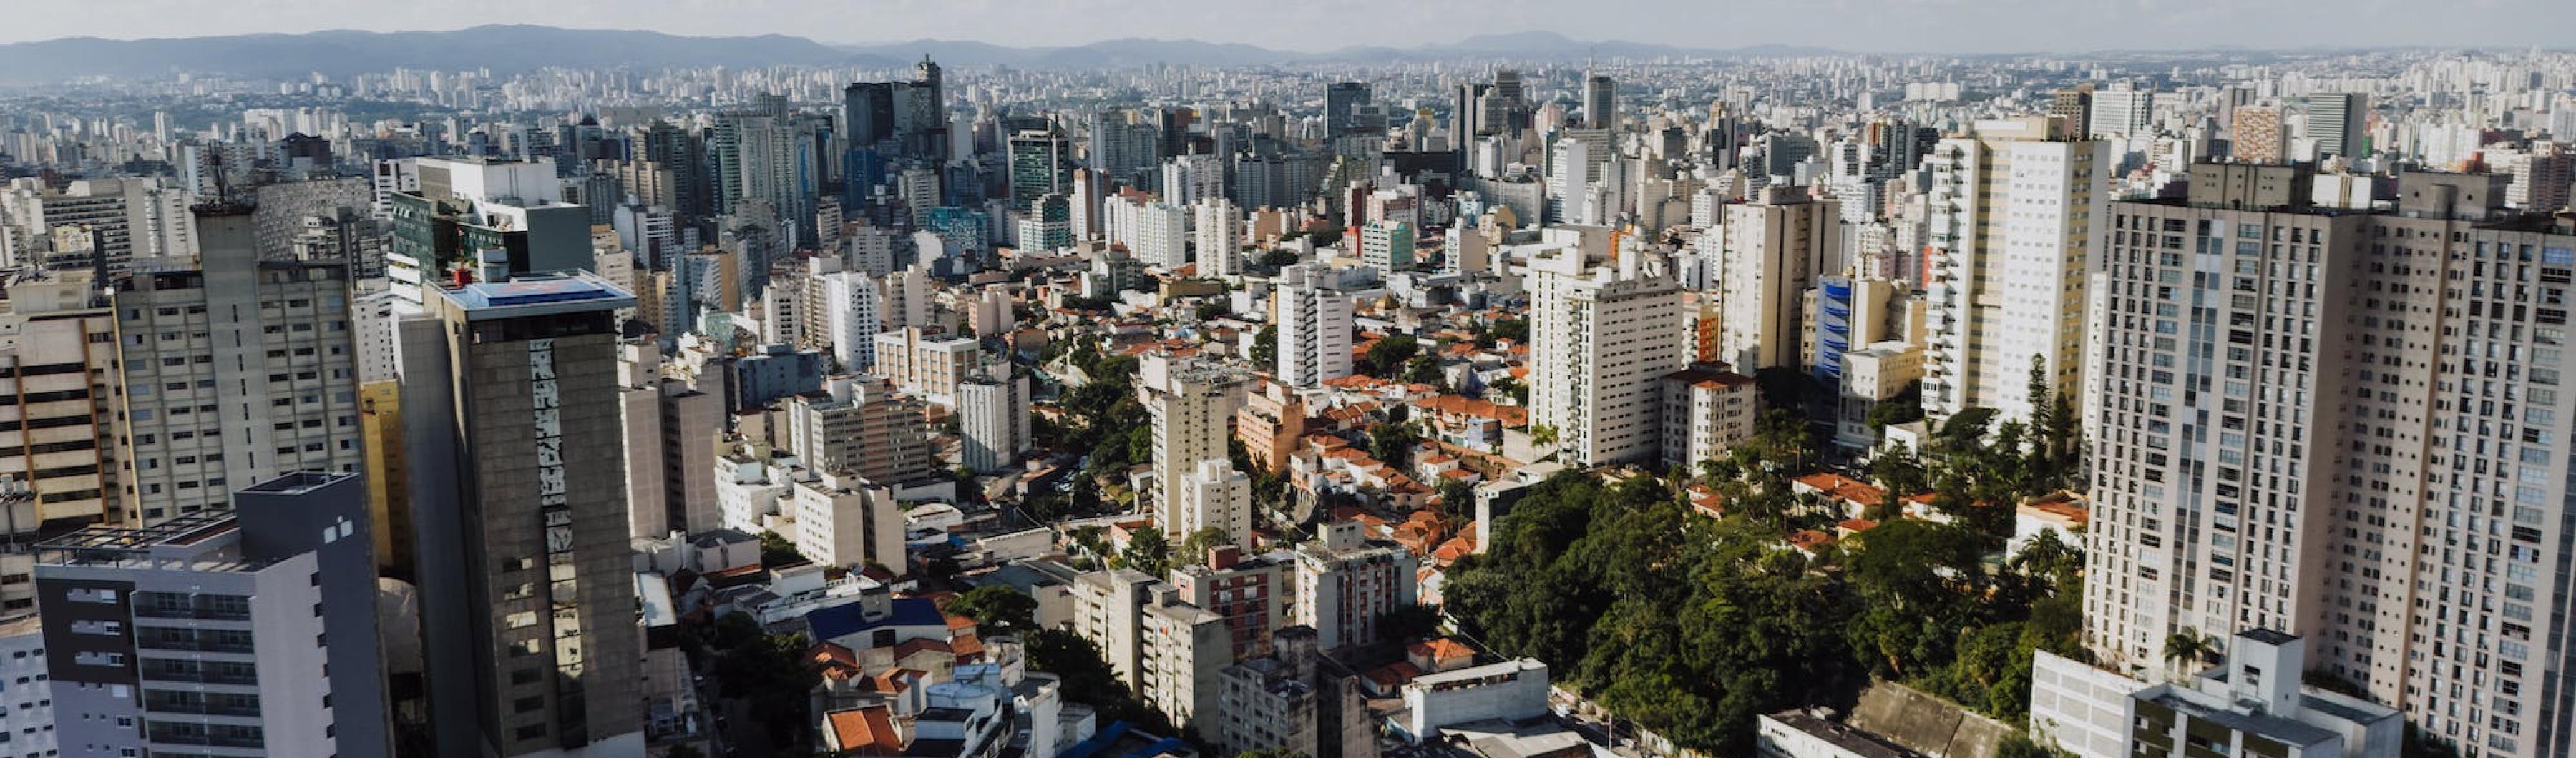 Foto cakrawala Sao Paulo